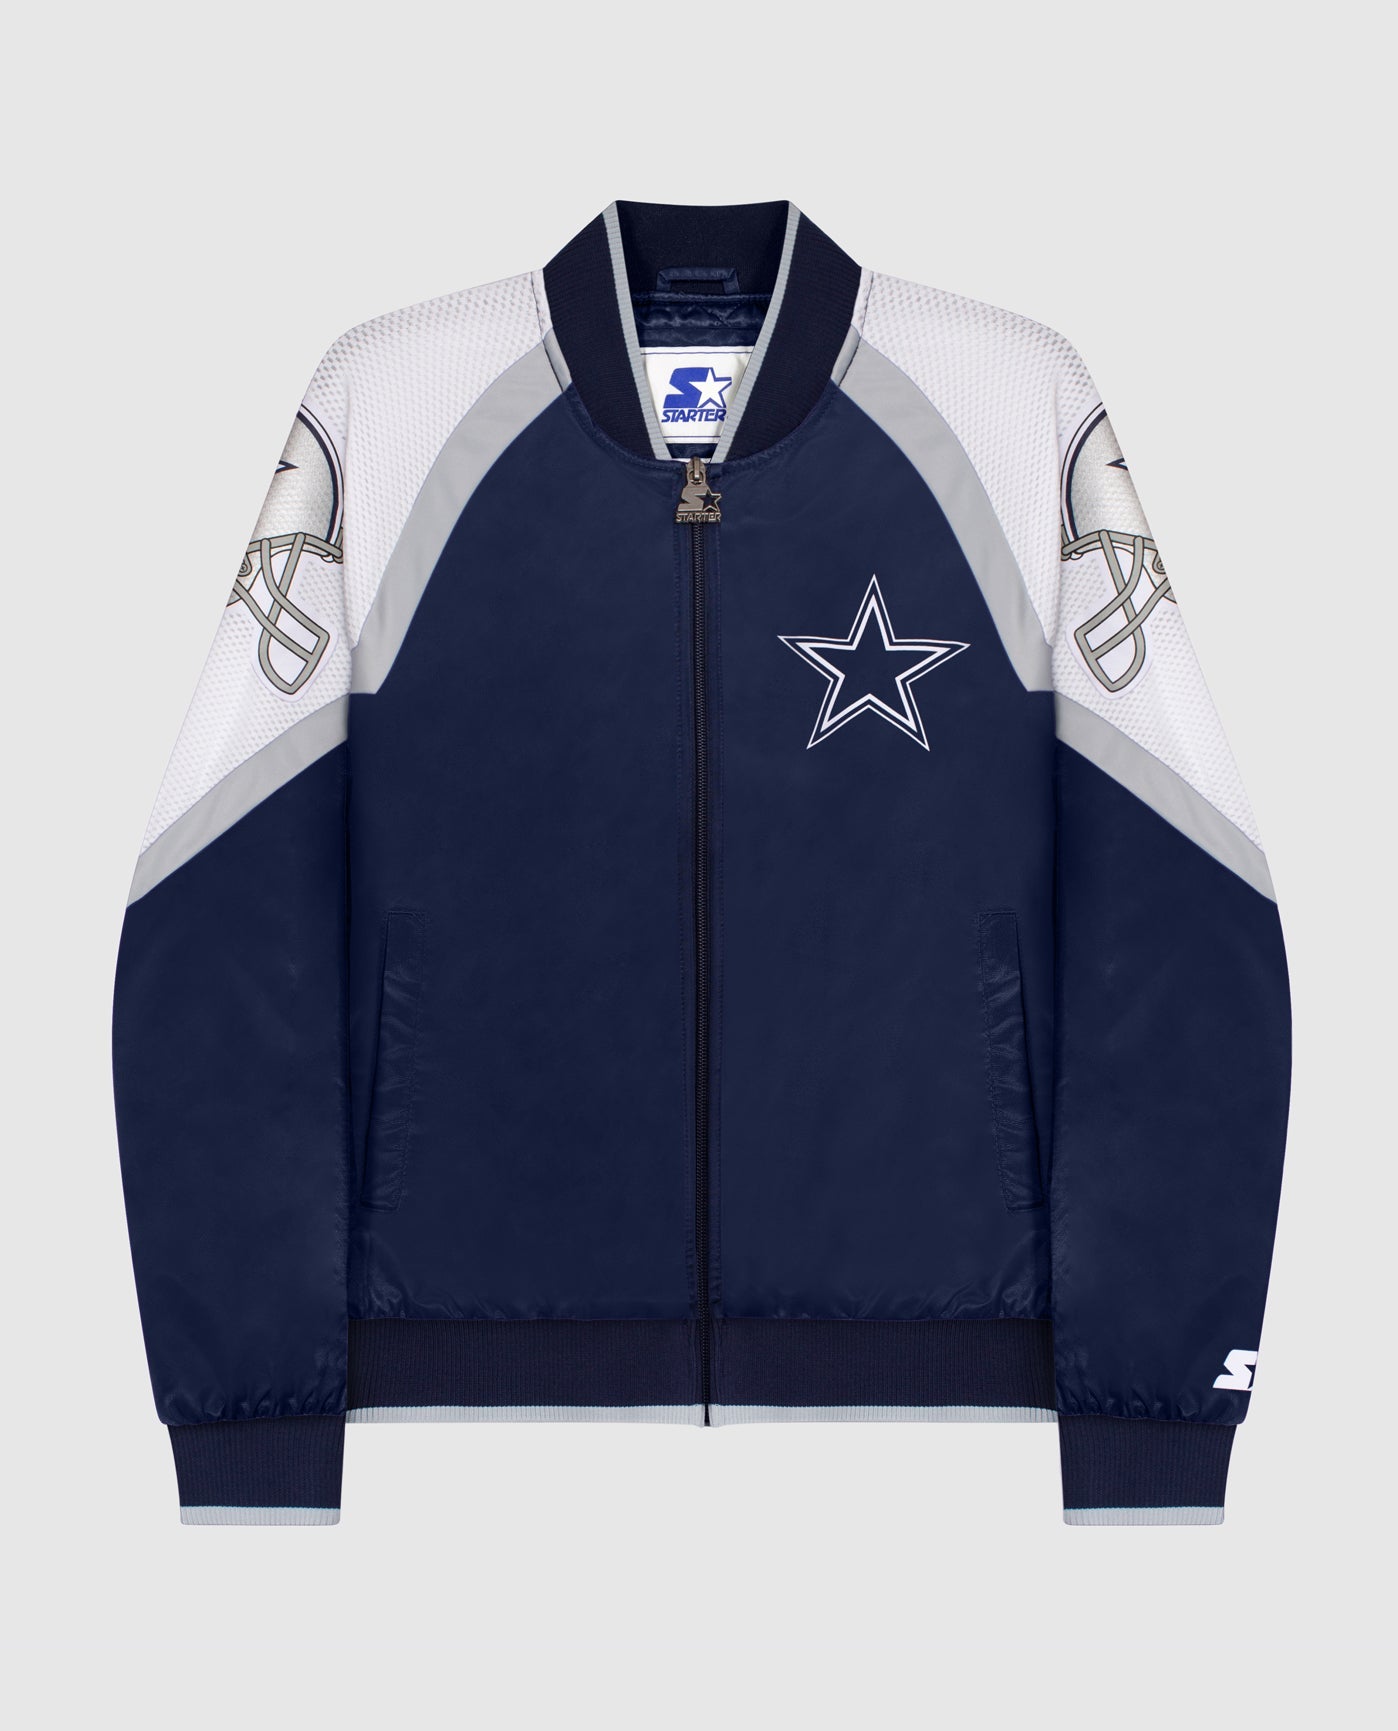 Dallas Cowboys Starter Jackets